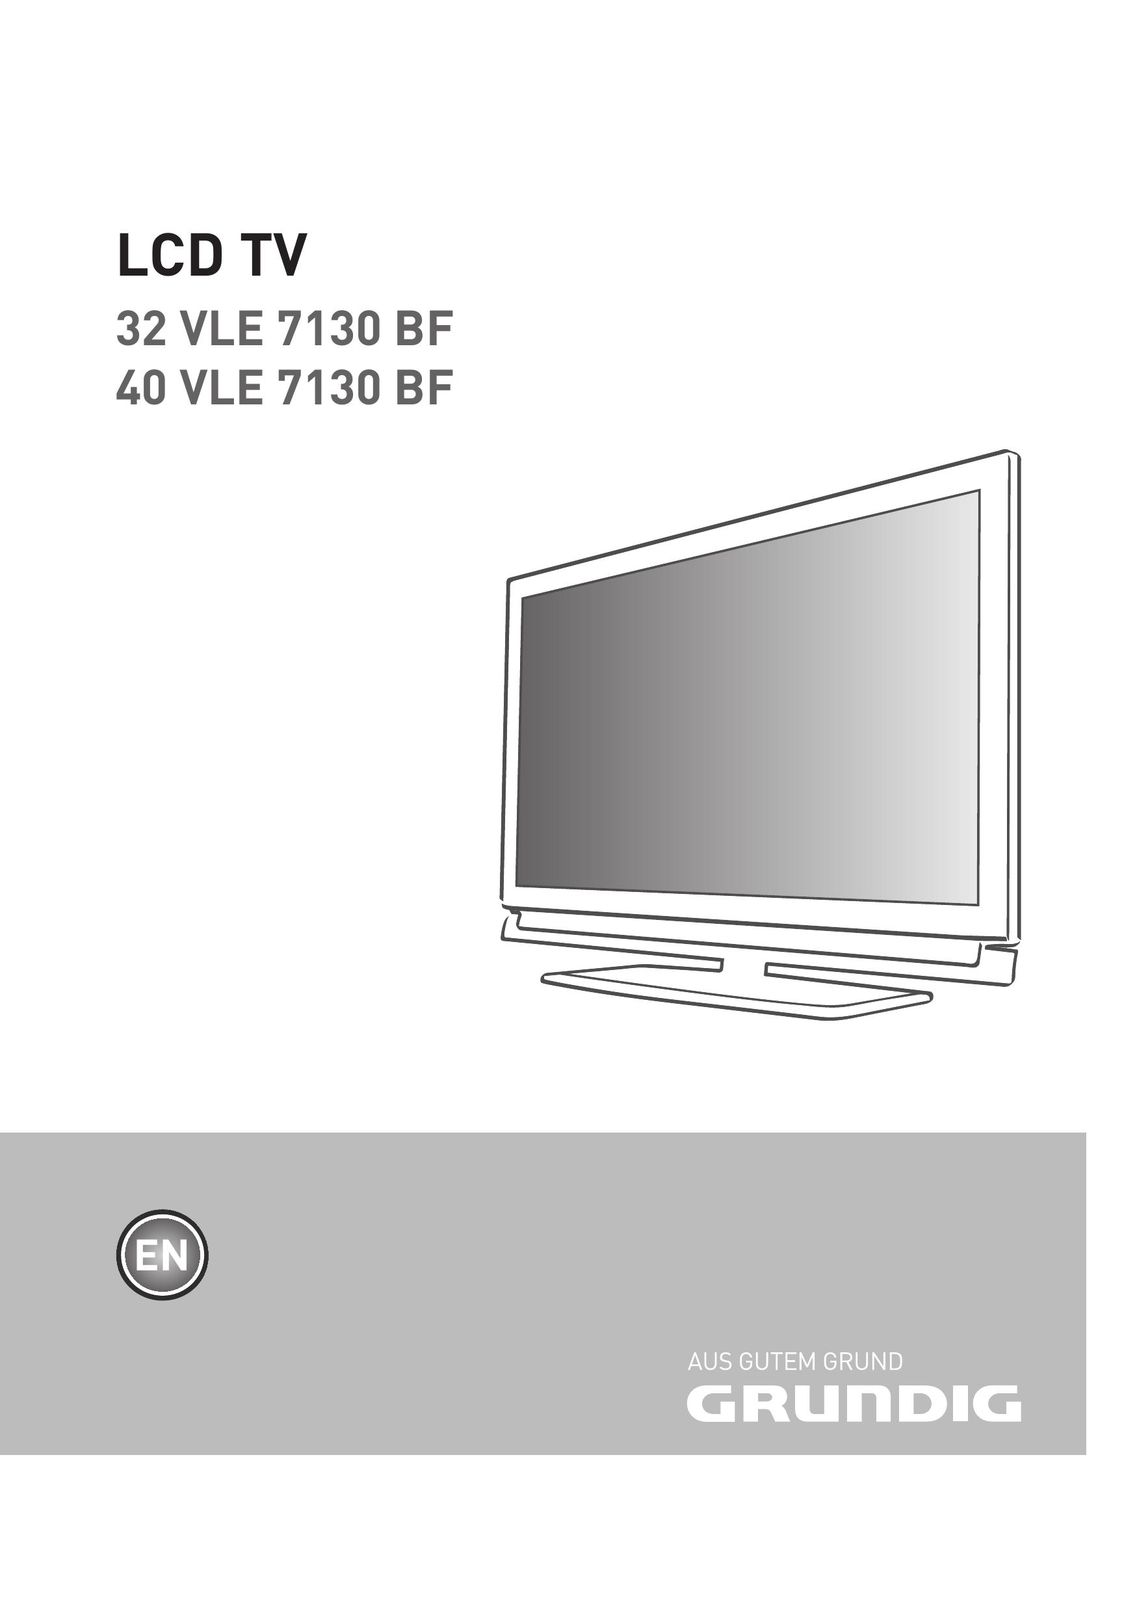 Grundig 32 VLE 7130 BF Flat Panel Television User Manual